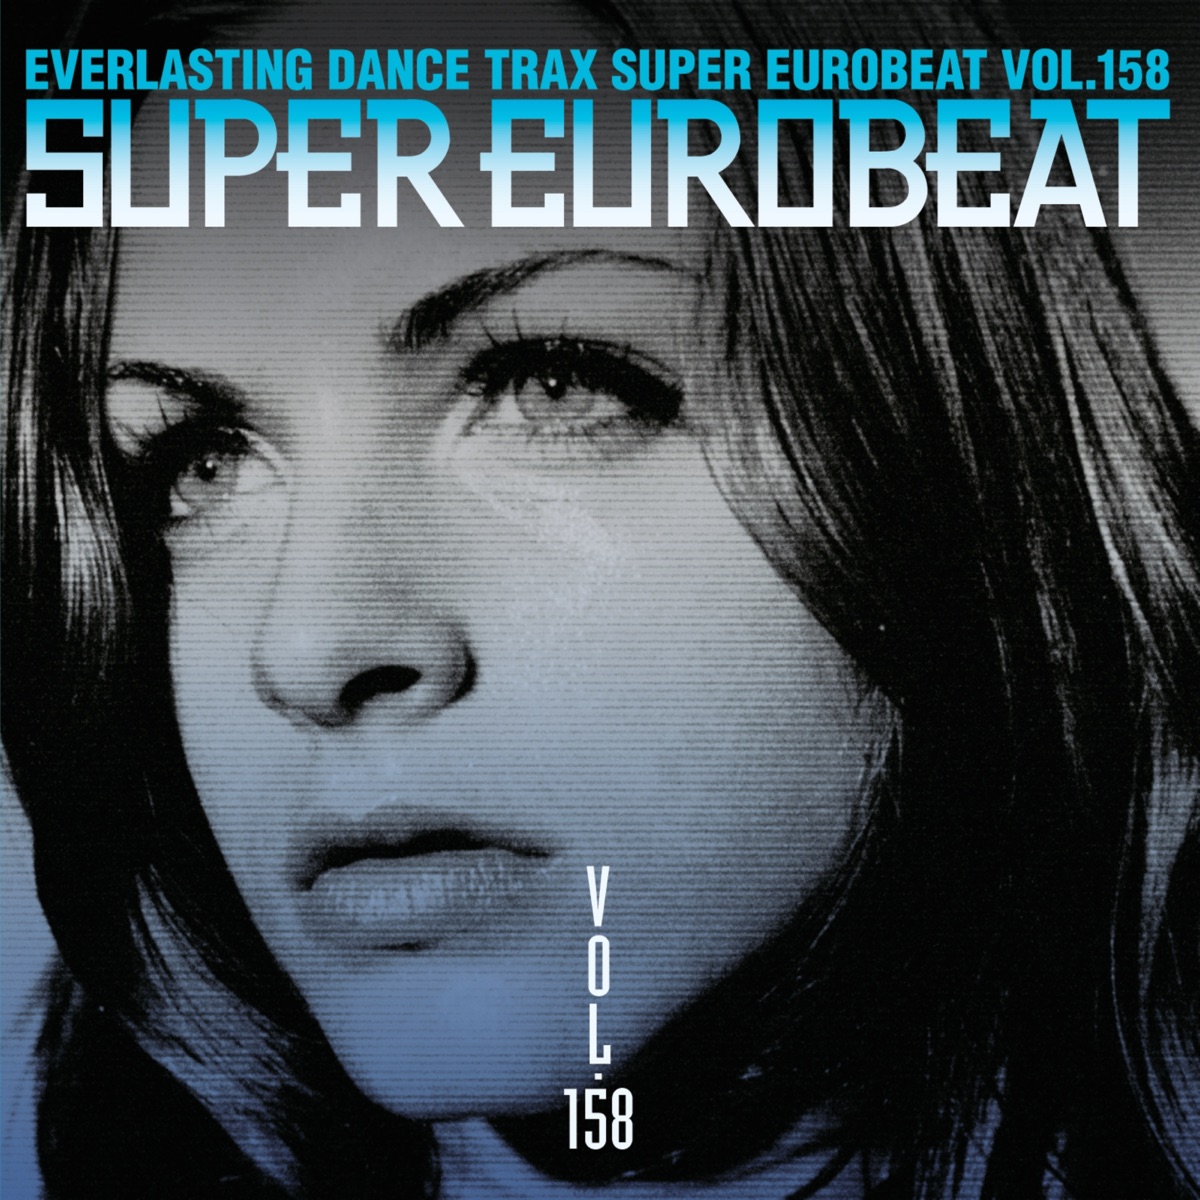 SUPER EUROBEAT VOL.158 - Album by Various Artists - Apple Music